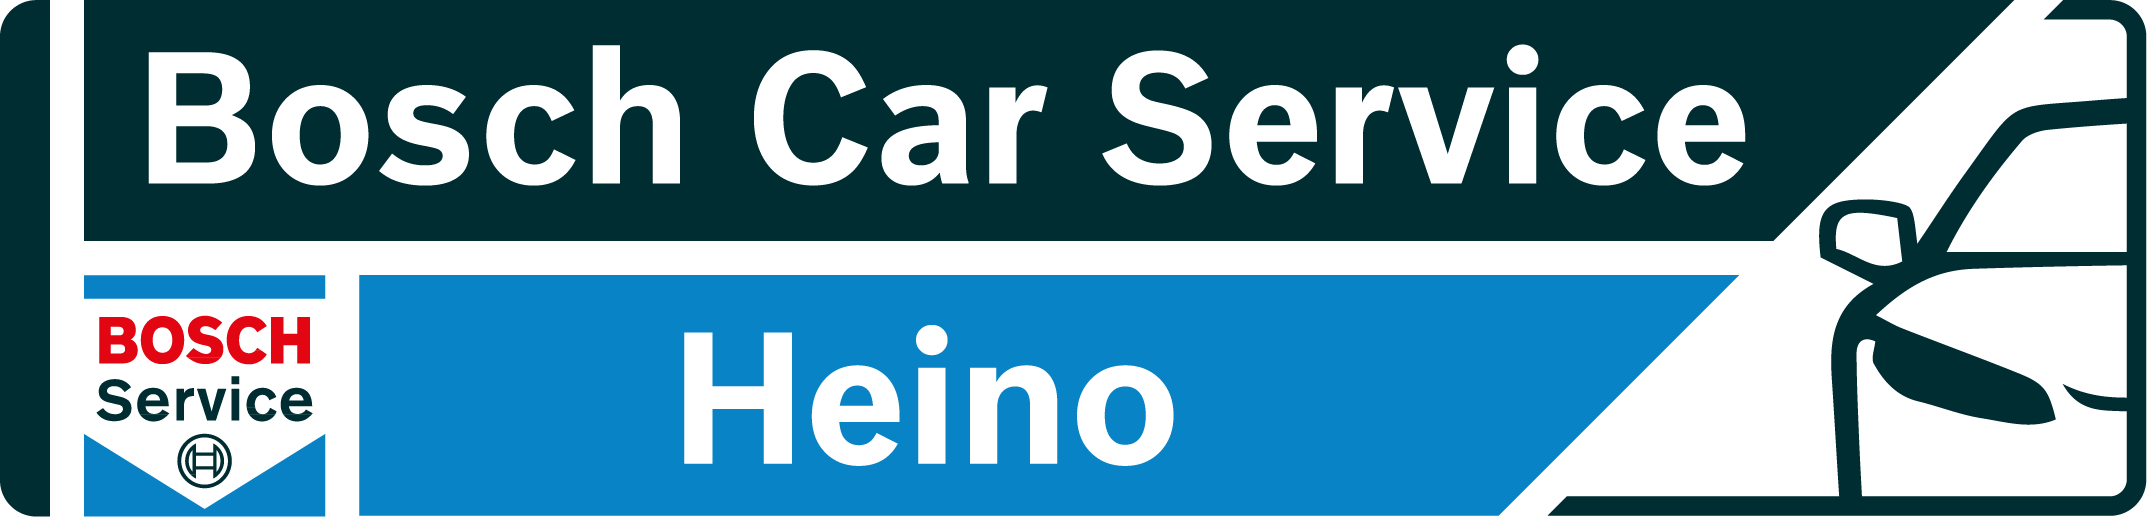 Bosch Car Service Heino